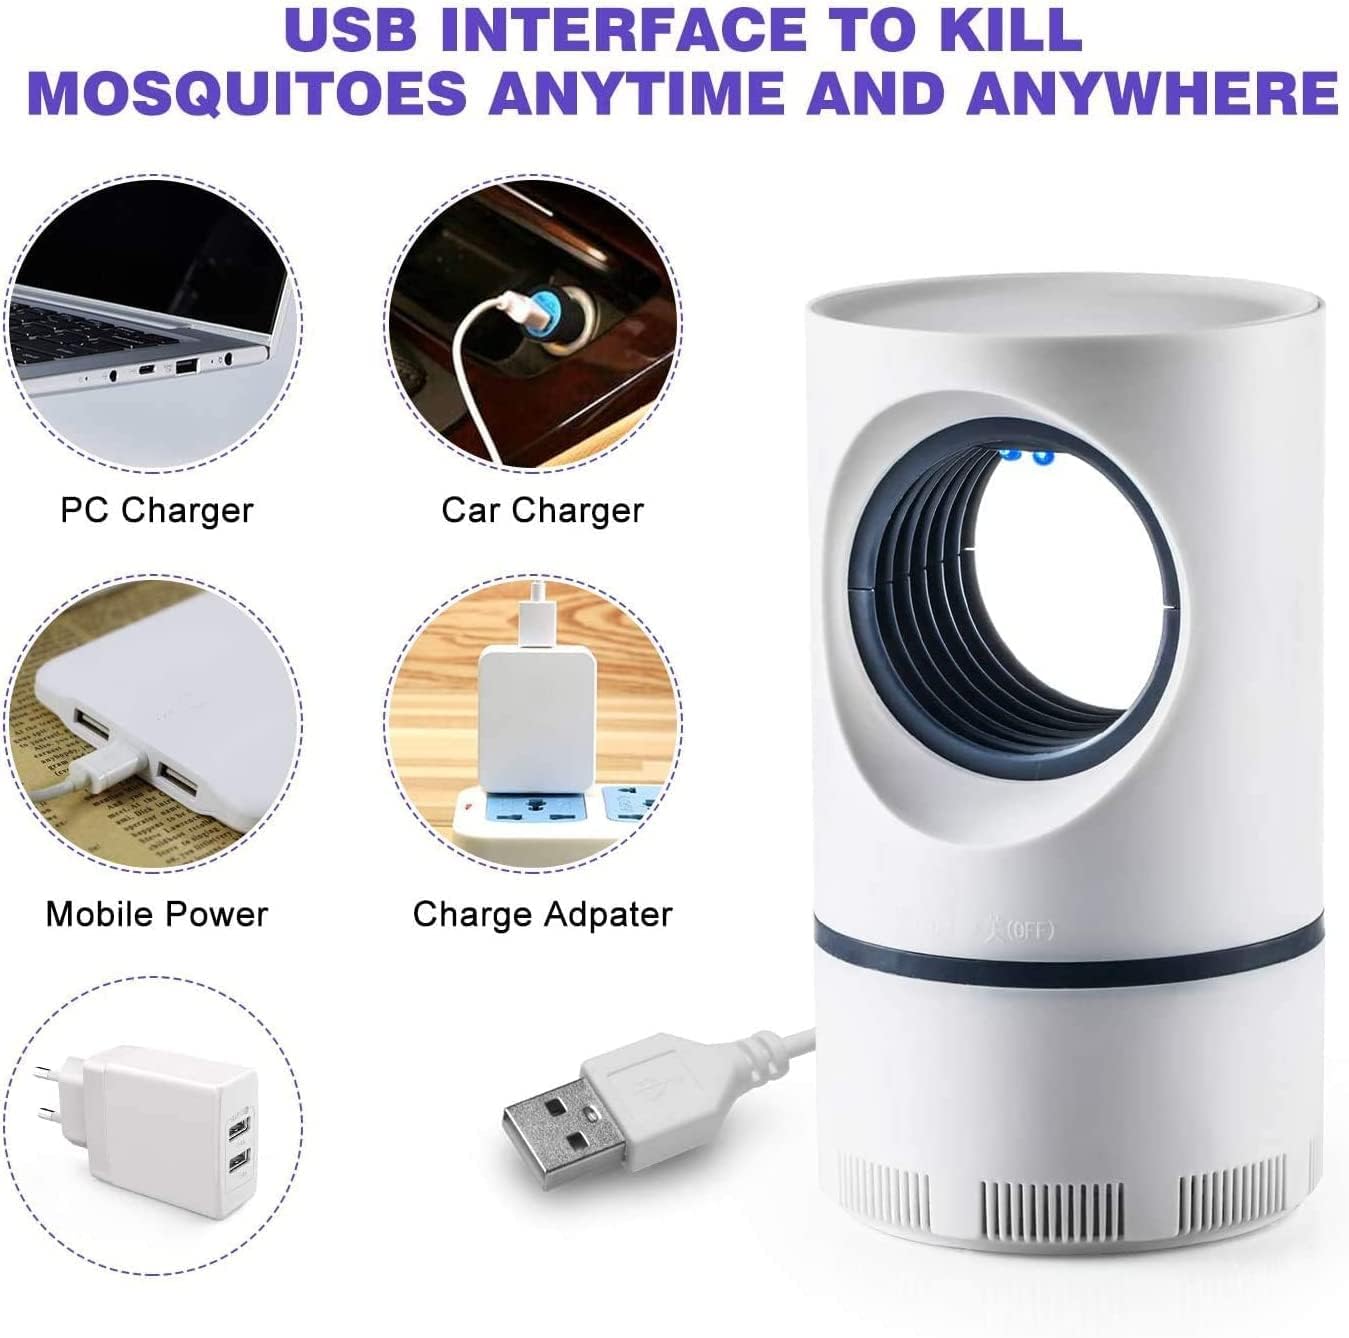 UV LED Mosquito Trap Lamp